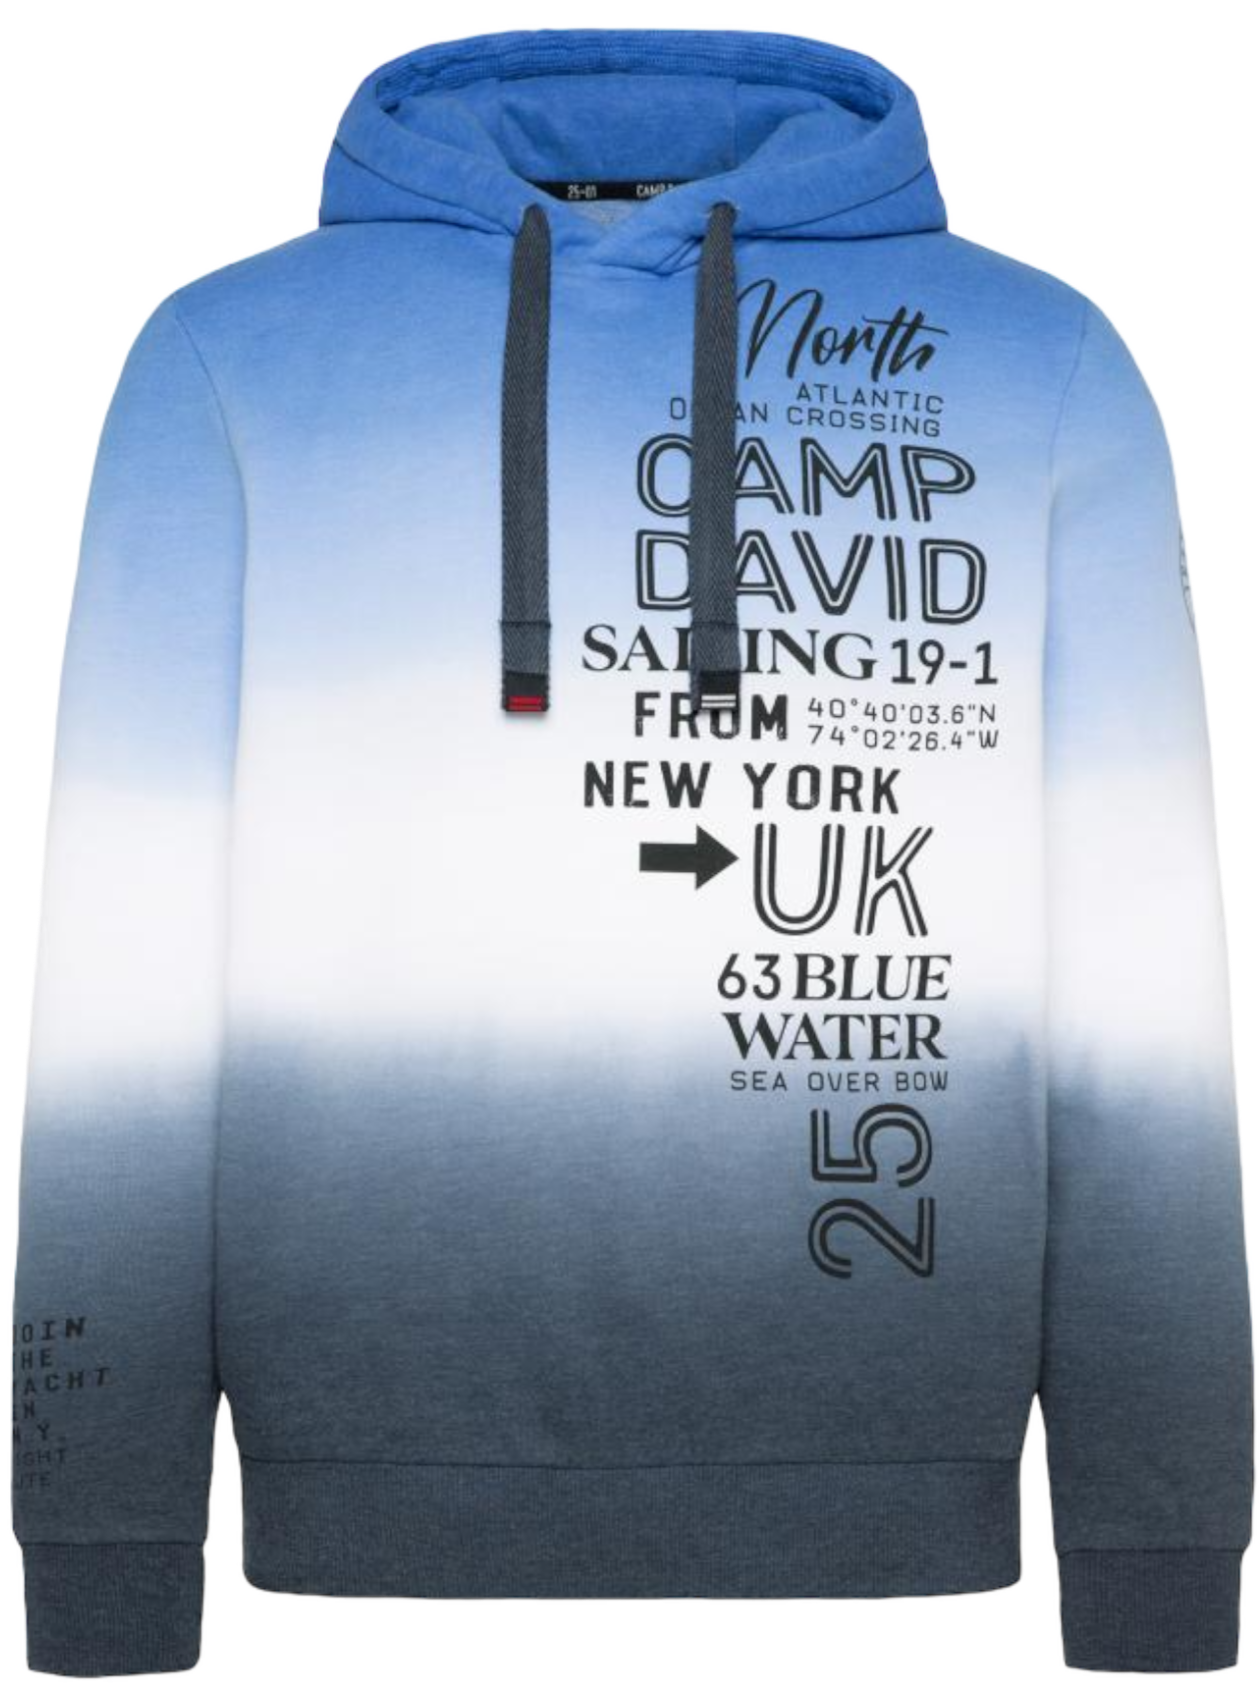 Camp David Sweaters, Cardigans & Sweatshirts: Quality and Versatility -  Stateshop Fashion